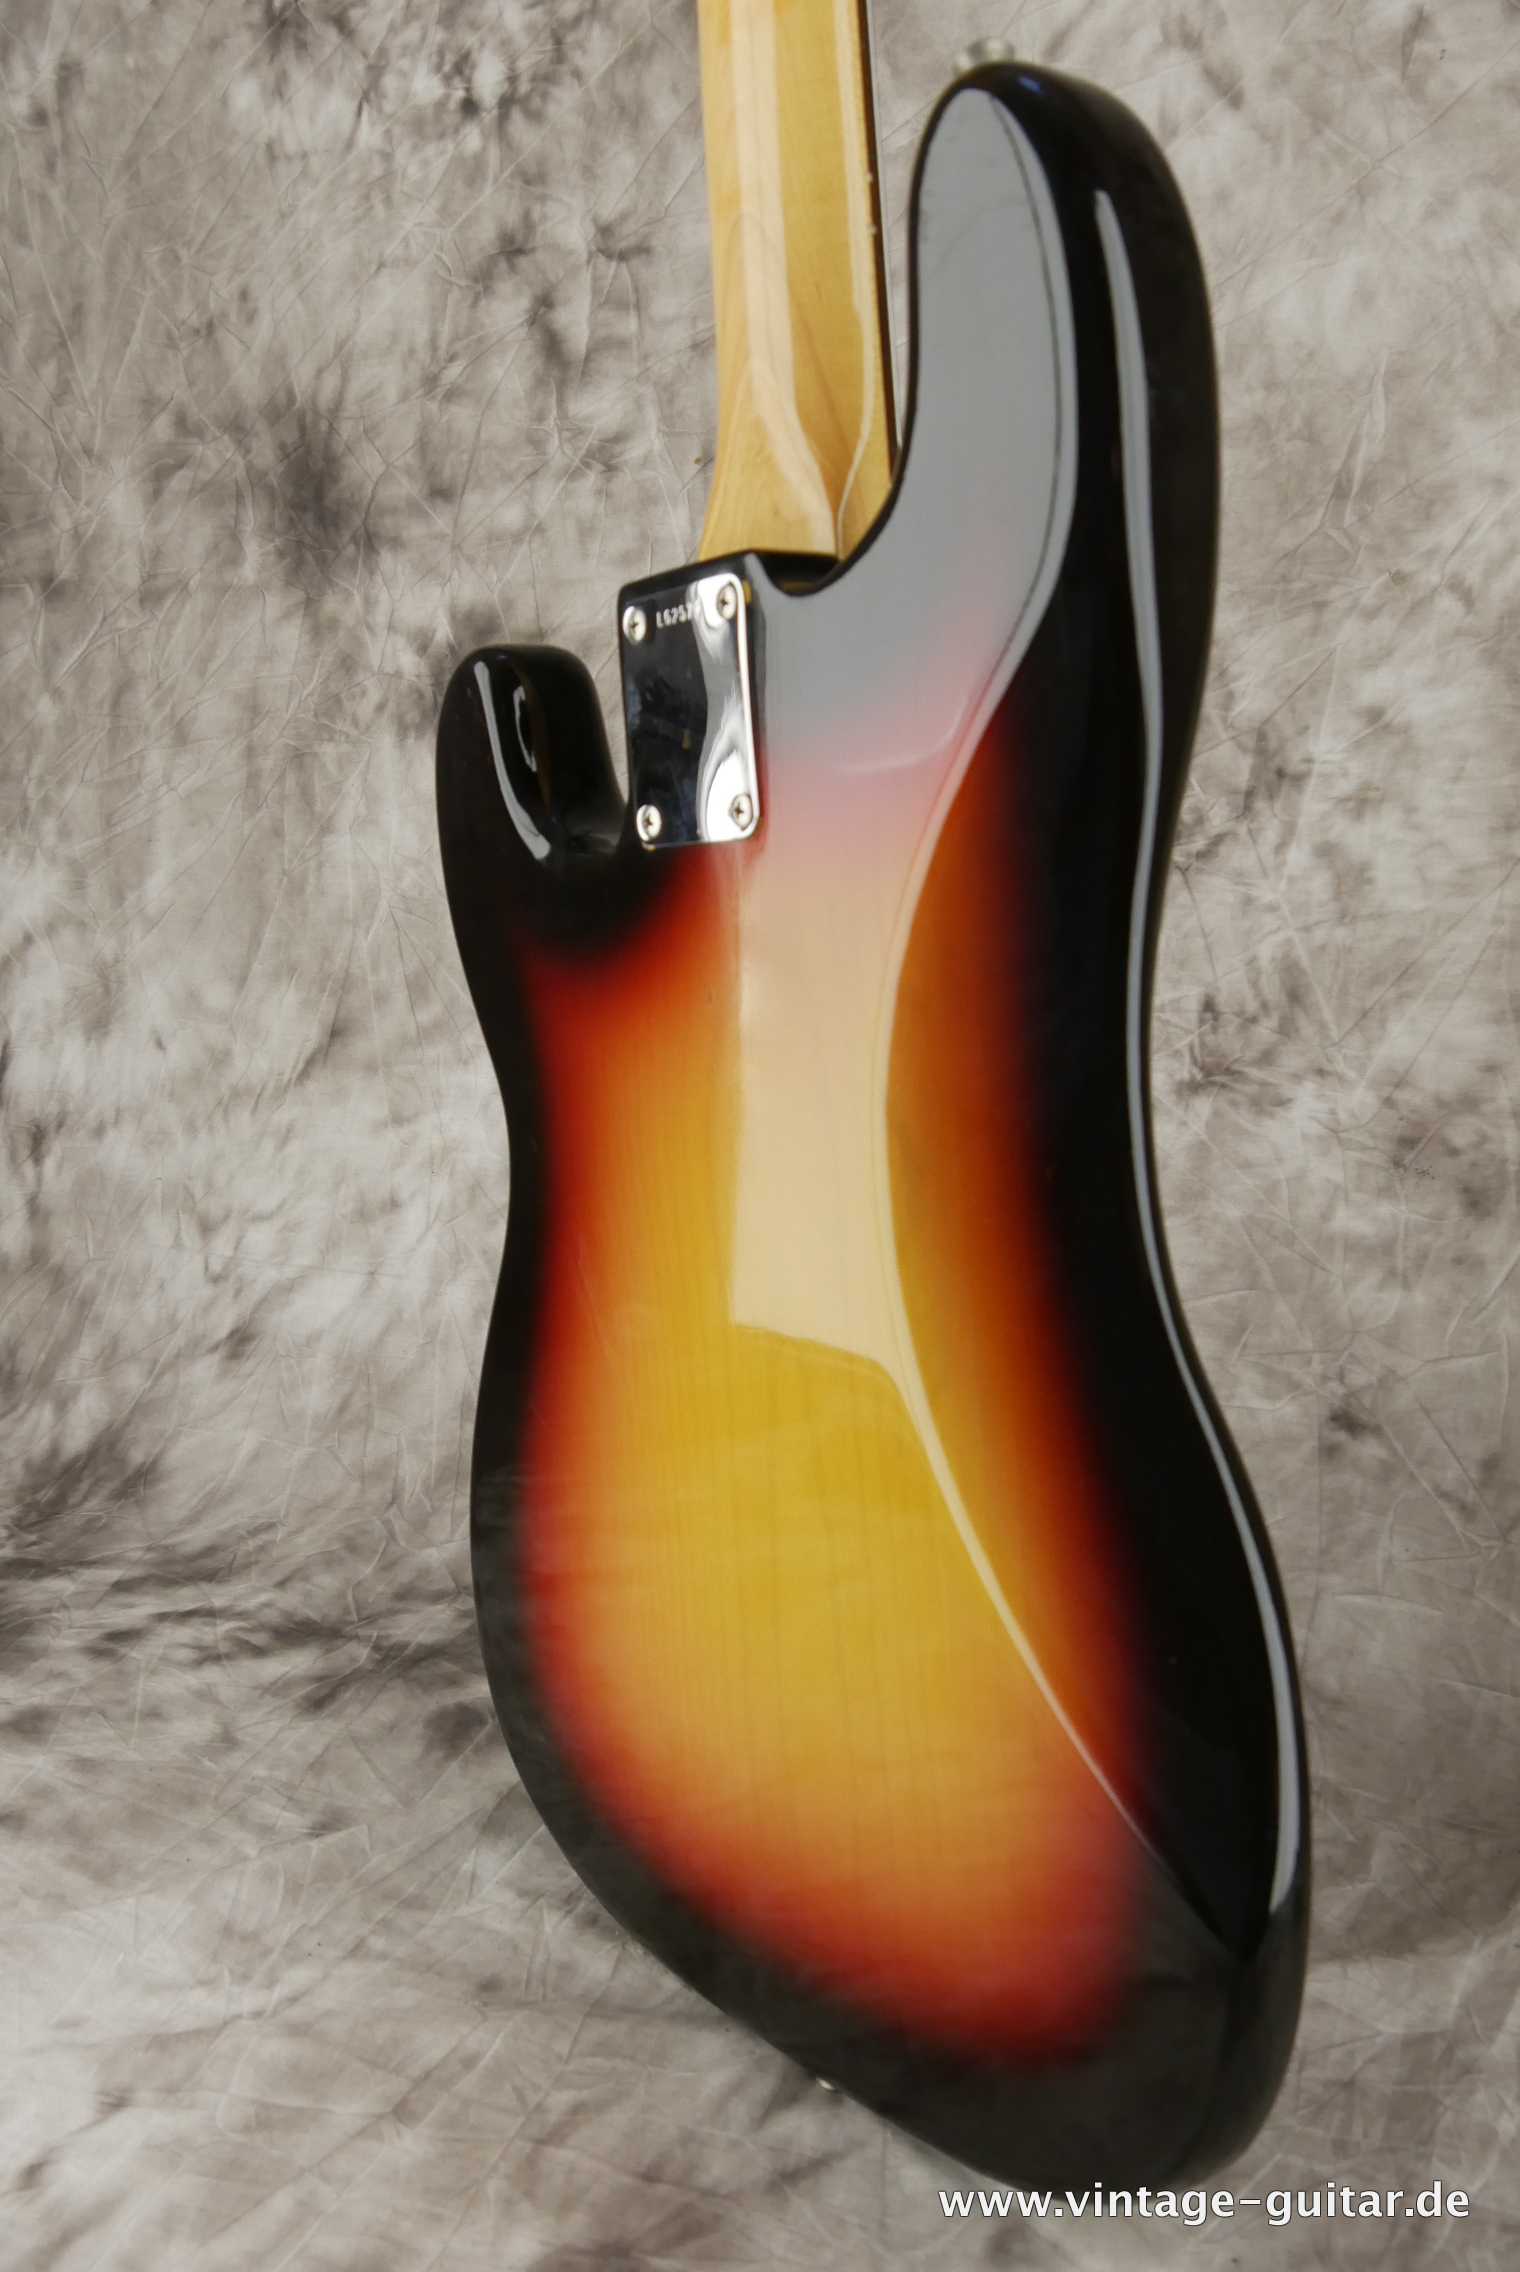 Fender-Precision-Bass-1965-sunburst-mint-condition-008.JPG